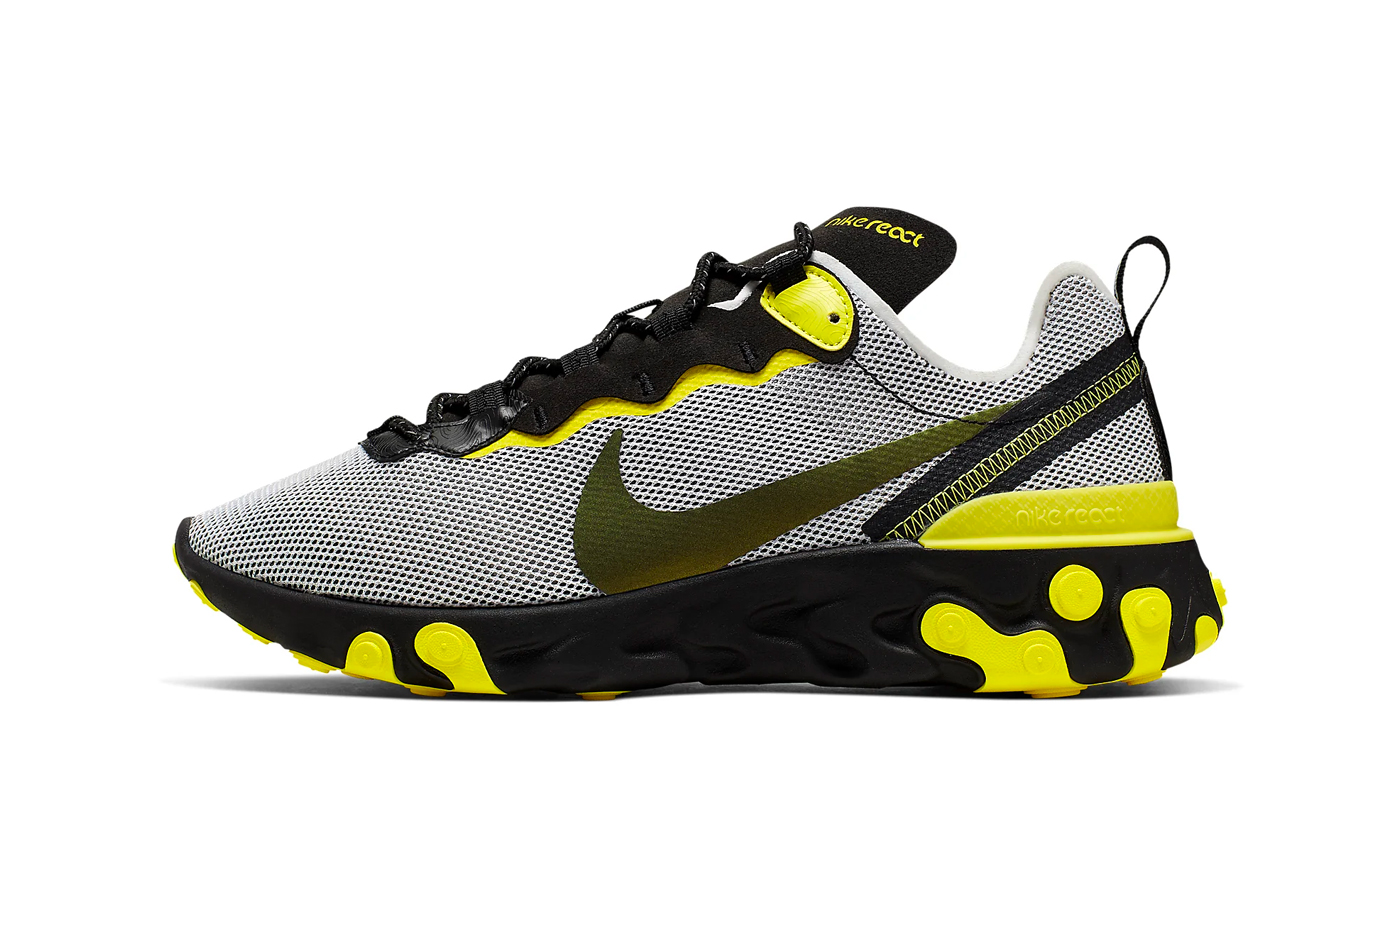 Nike React 55 "Dynamic Yellow" Release Info